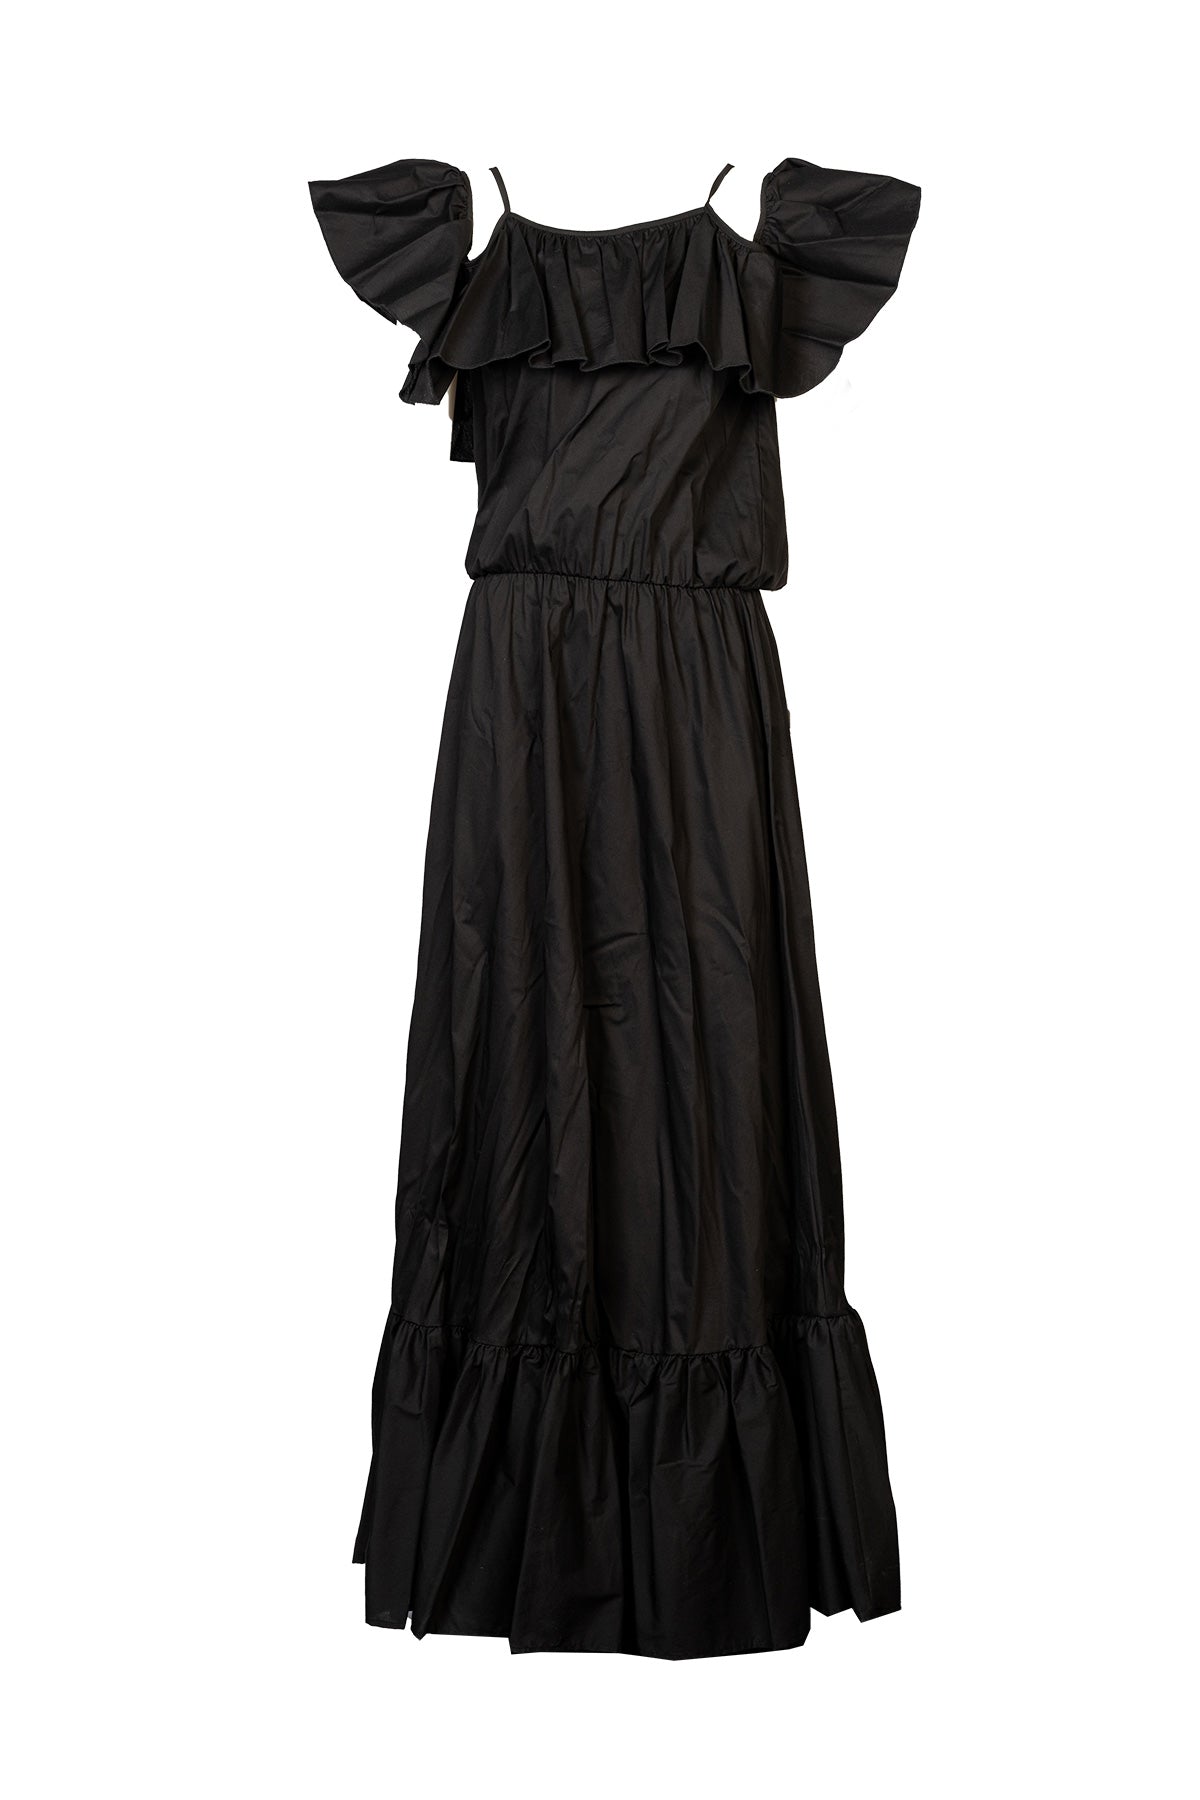 Long Black Dress Giulia N Couture